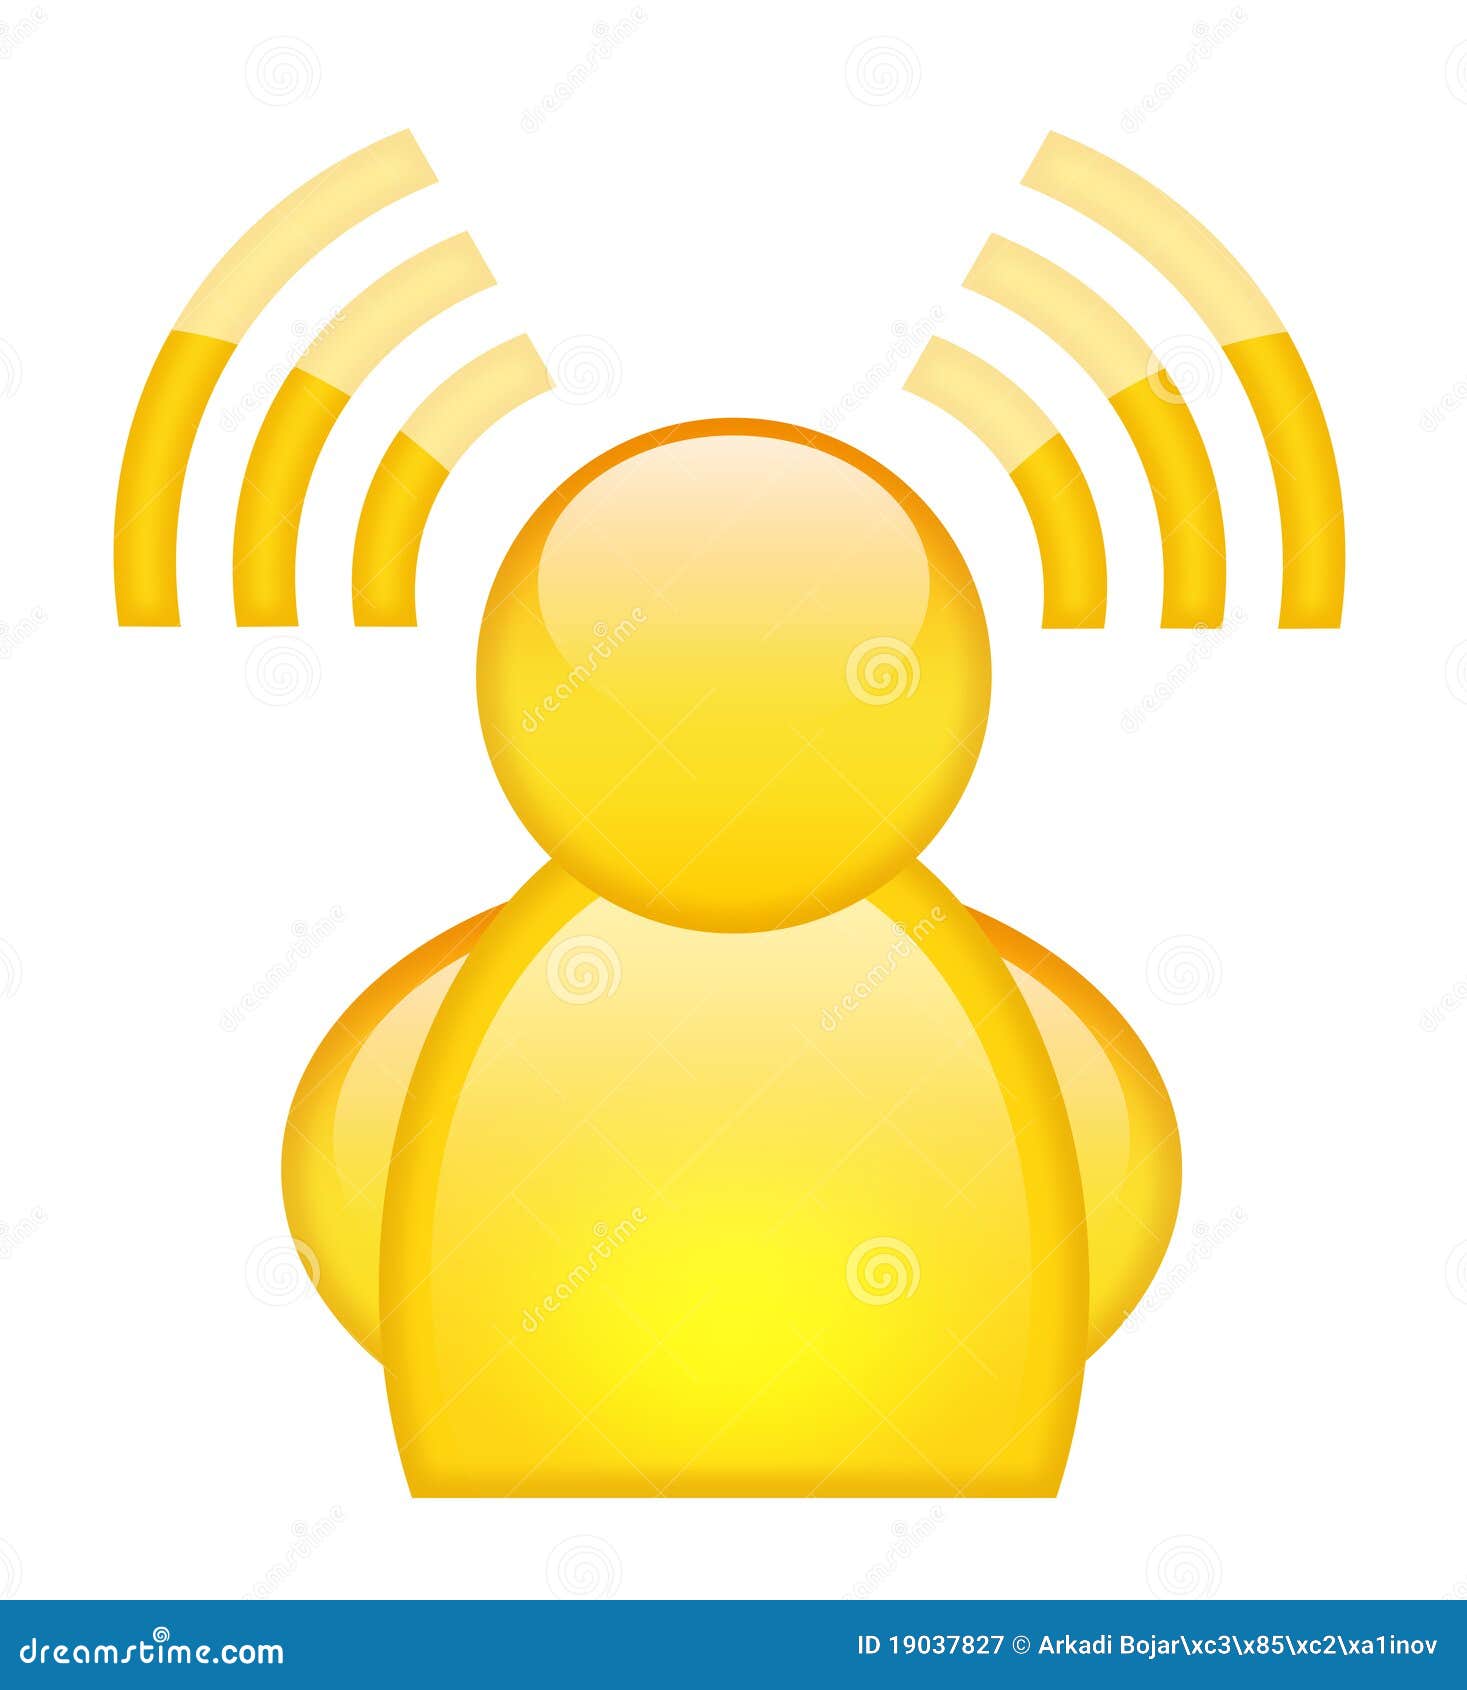 wi-fi user icon